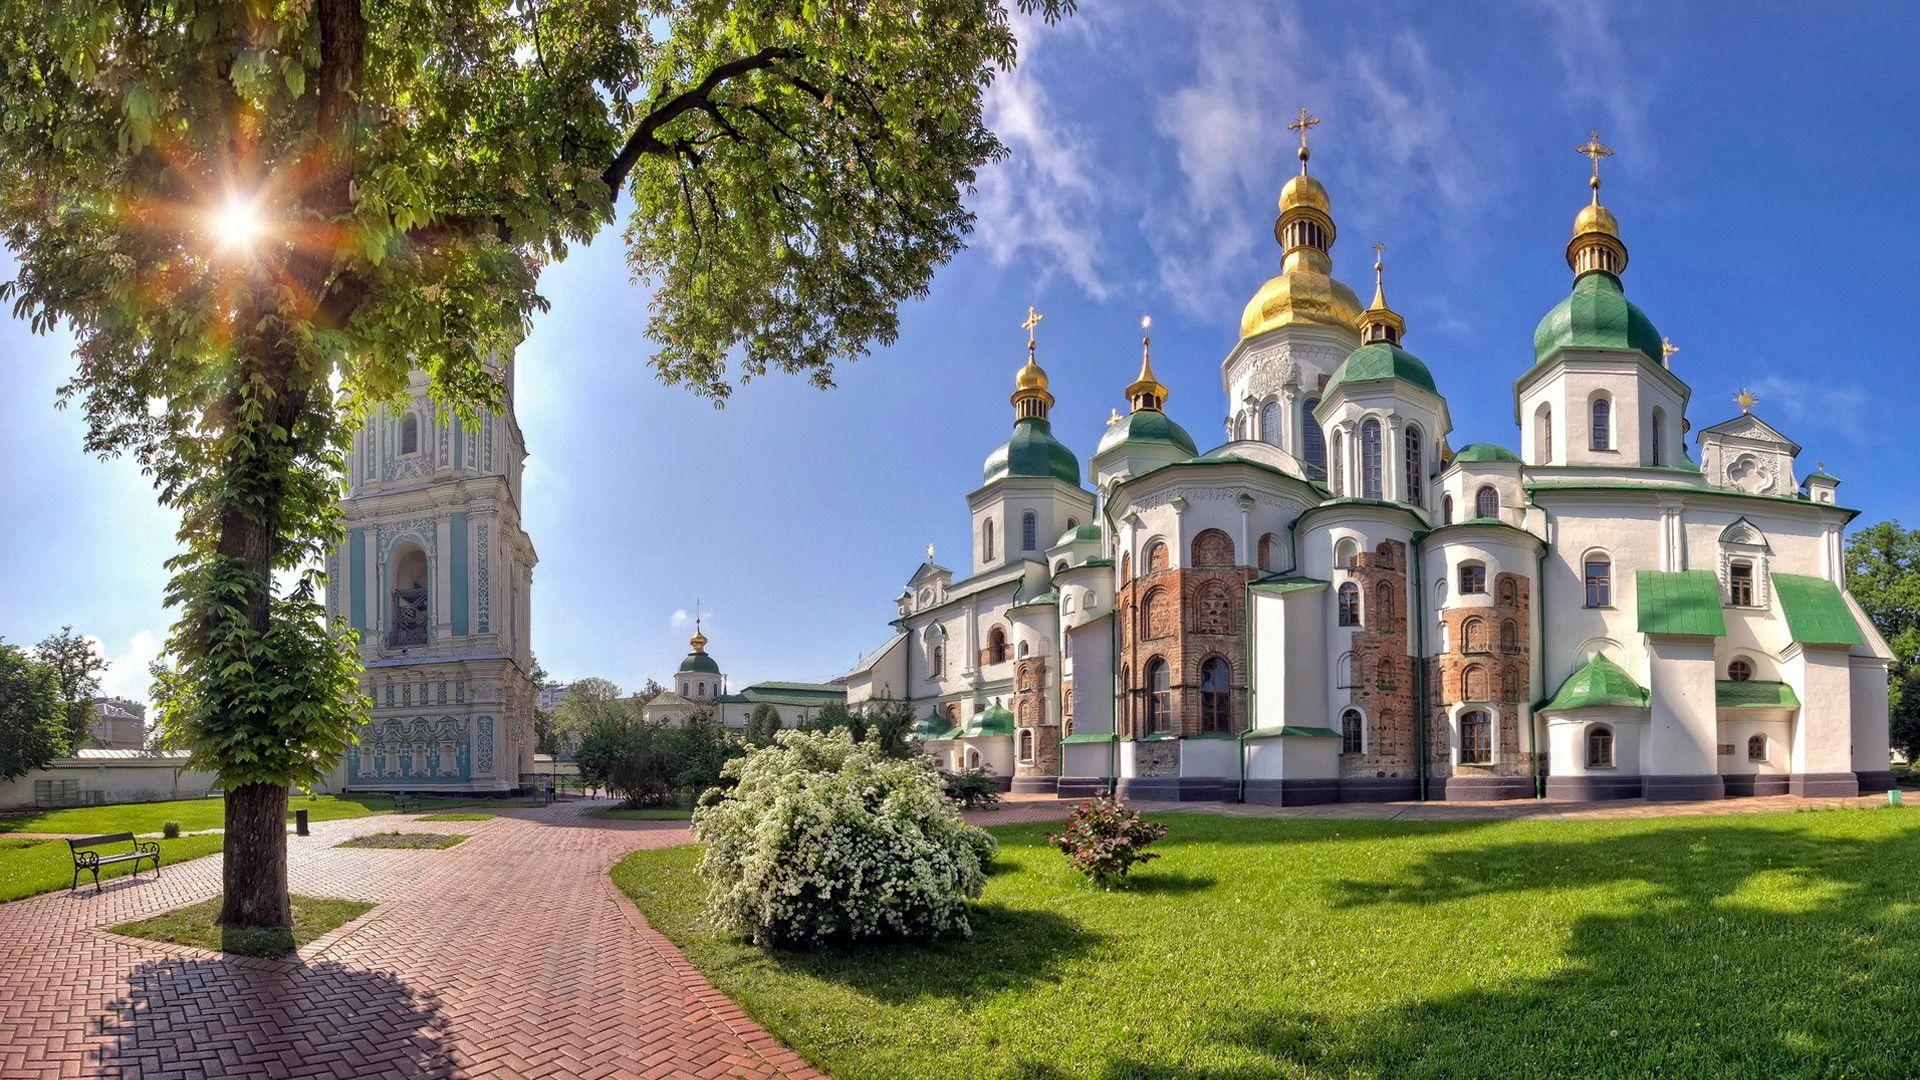 Ukraine Photos, Download The BEST Free Ukraine Stock Photos & HD Images